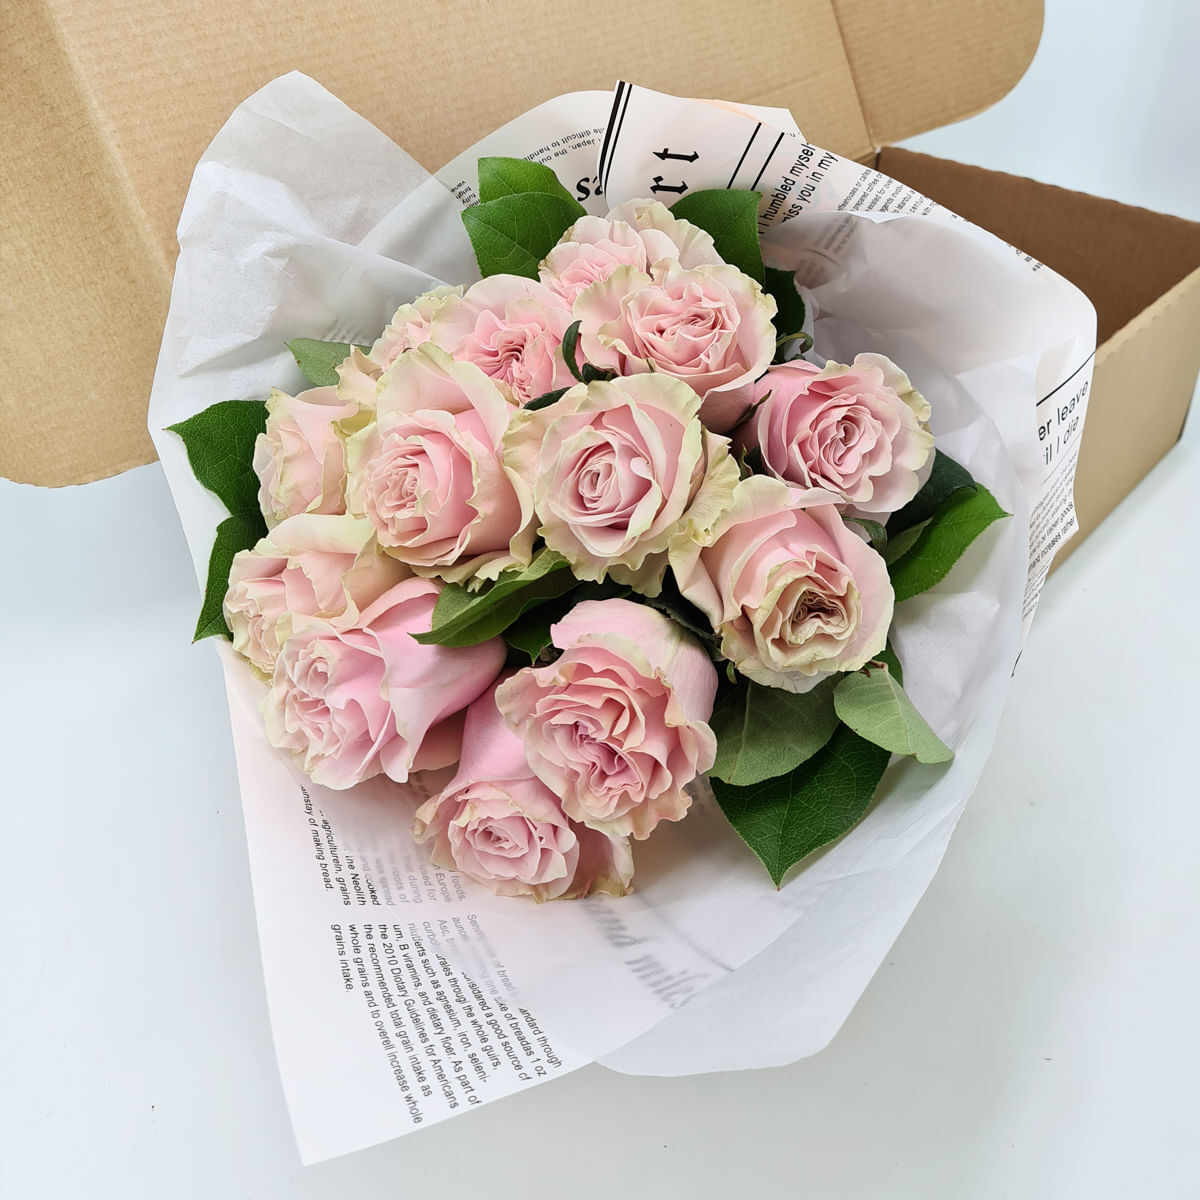 Buchet de 13 trandafiri roz in cutie